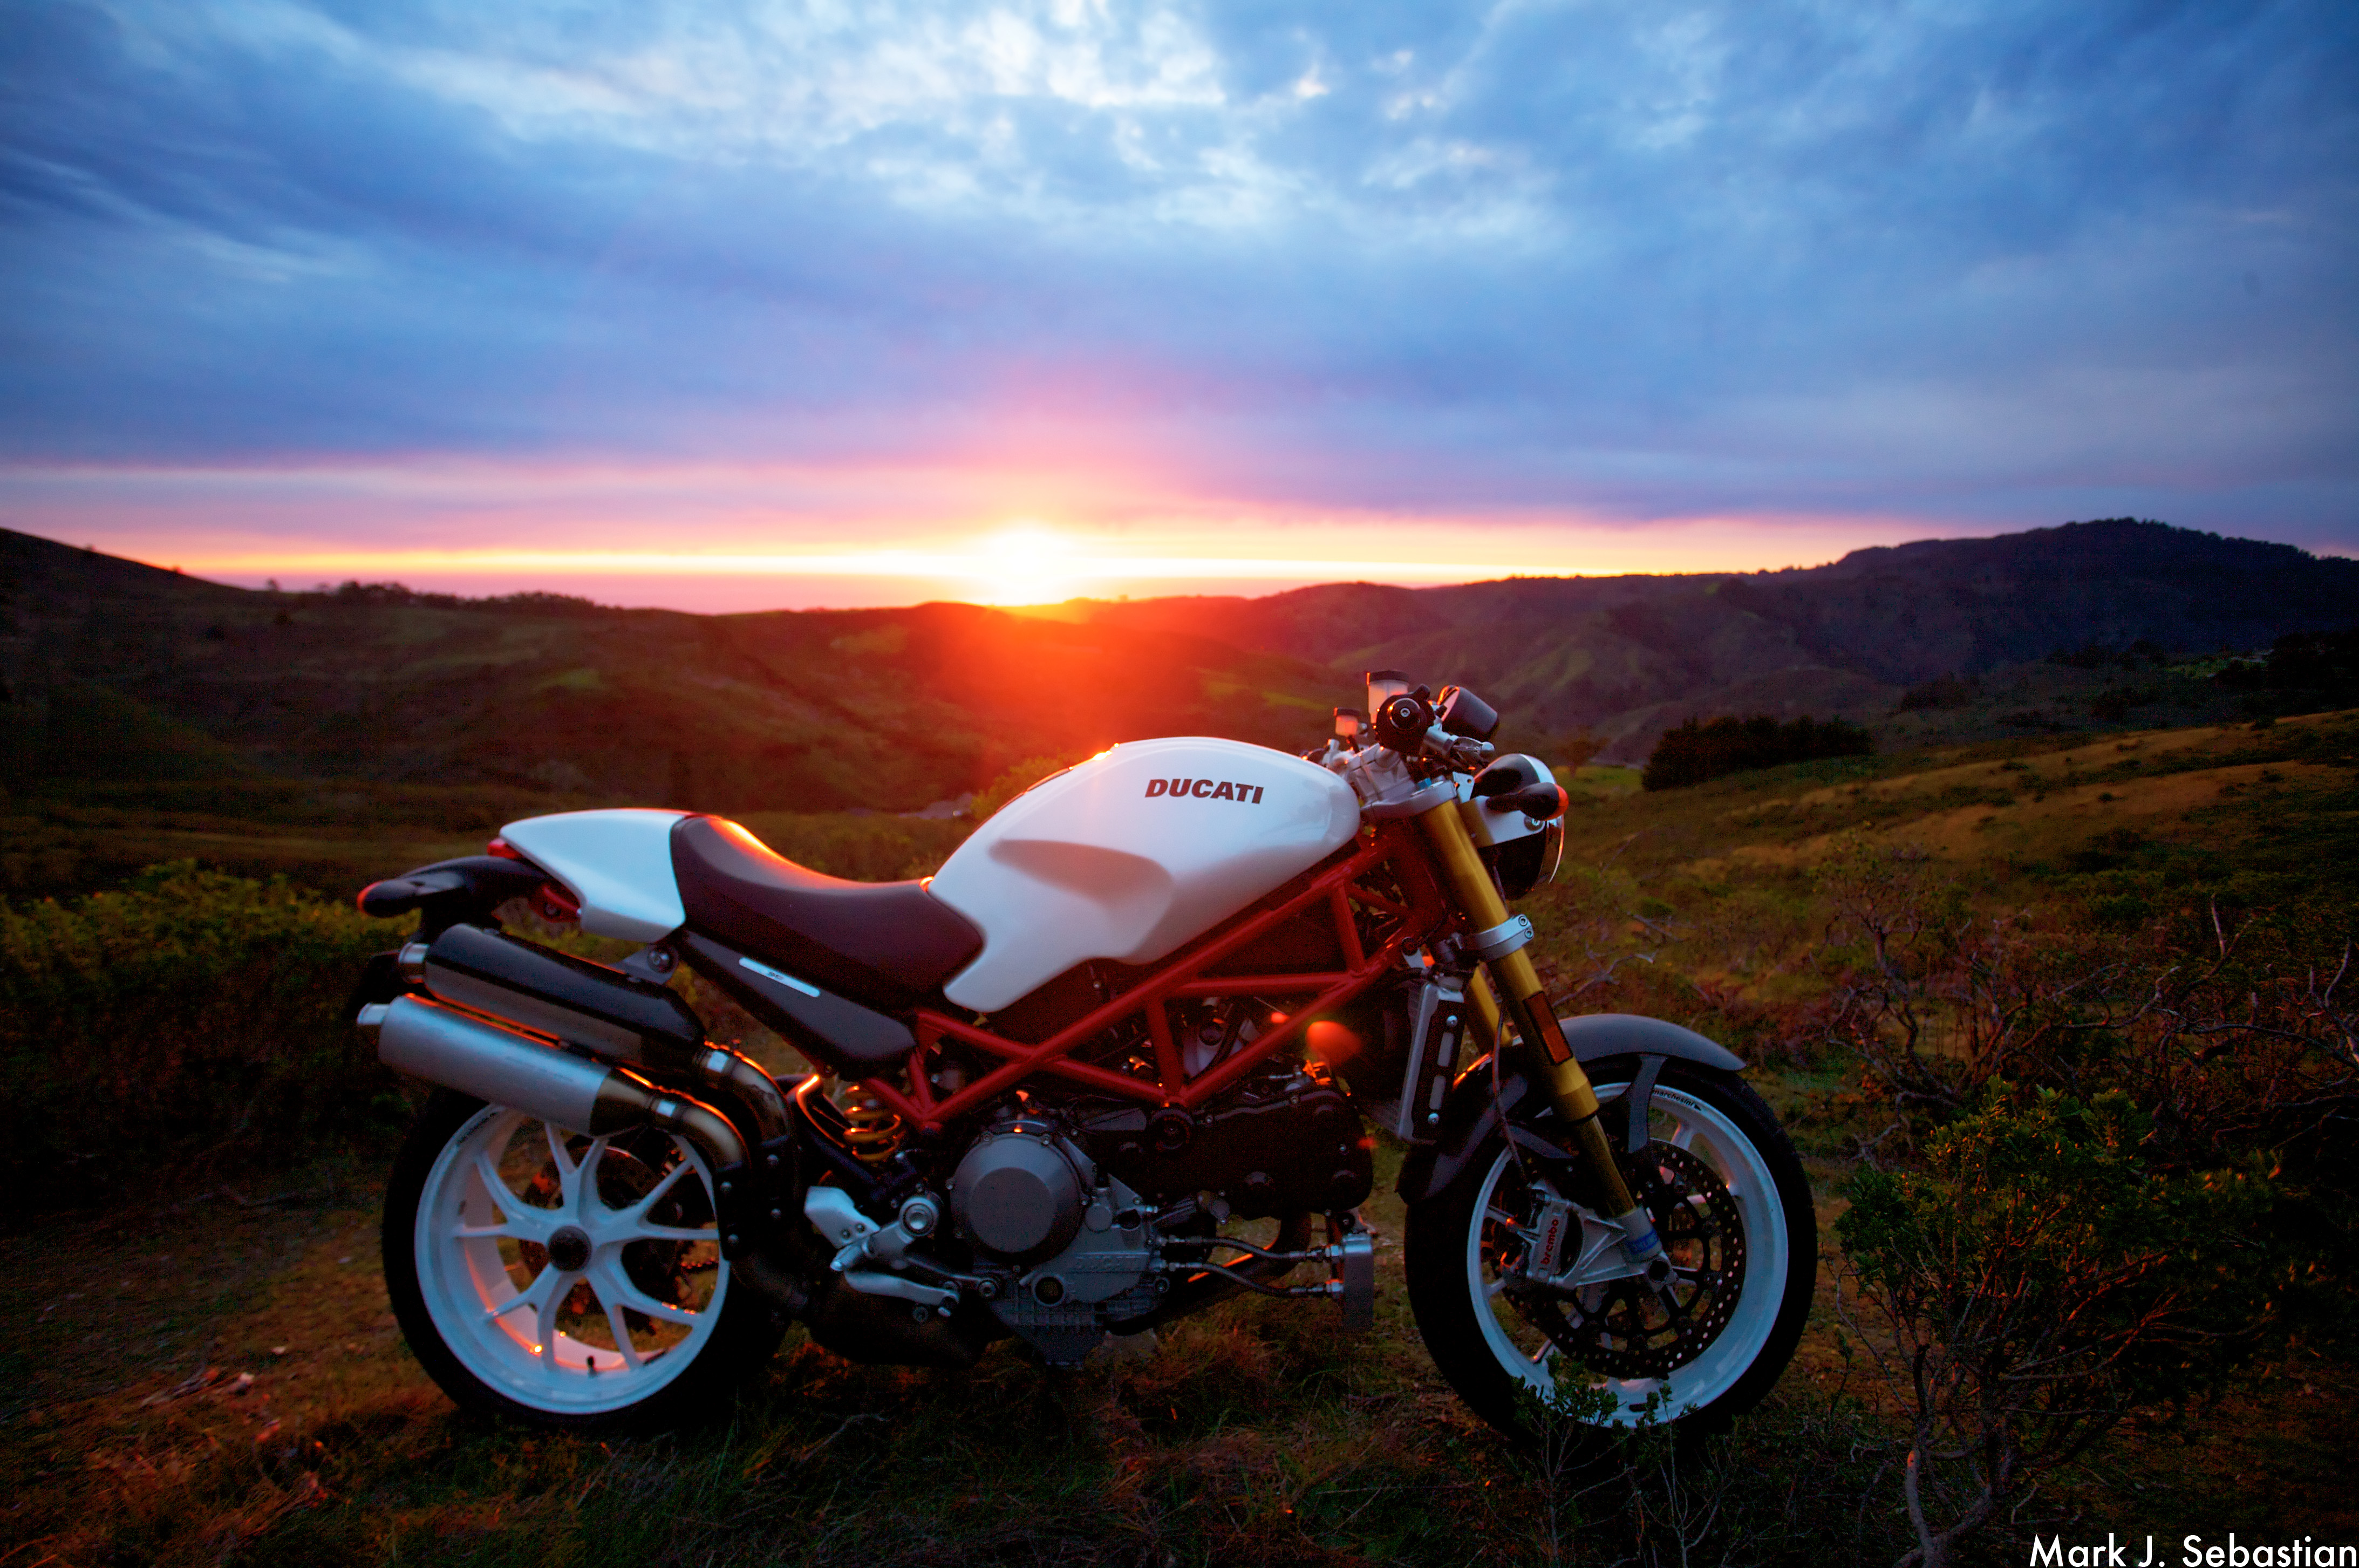 ducati, sunset, motorcycles, motorcycle, sunlight